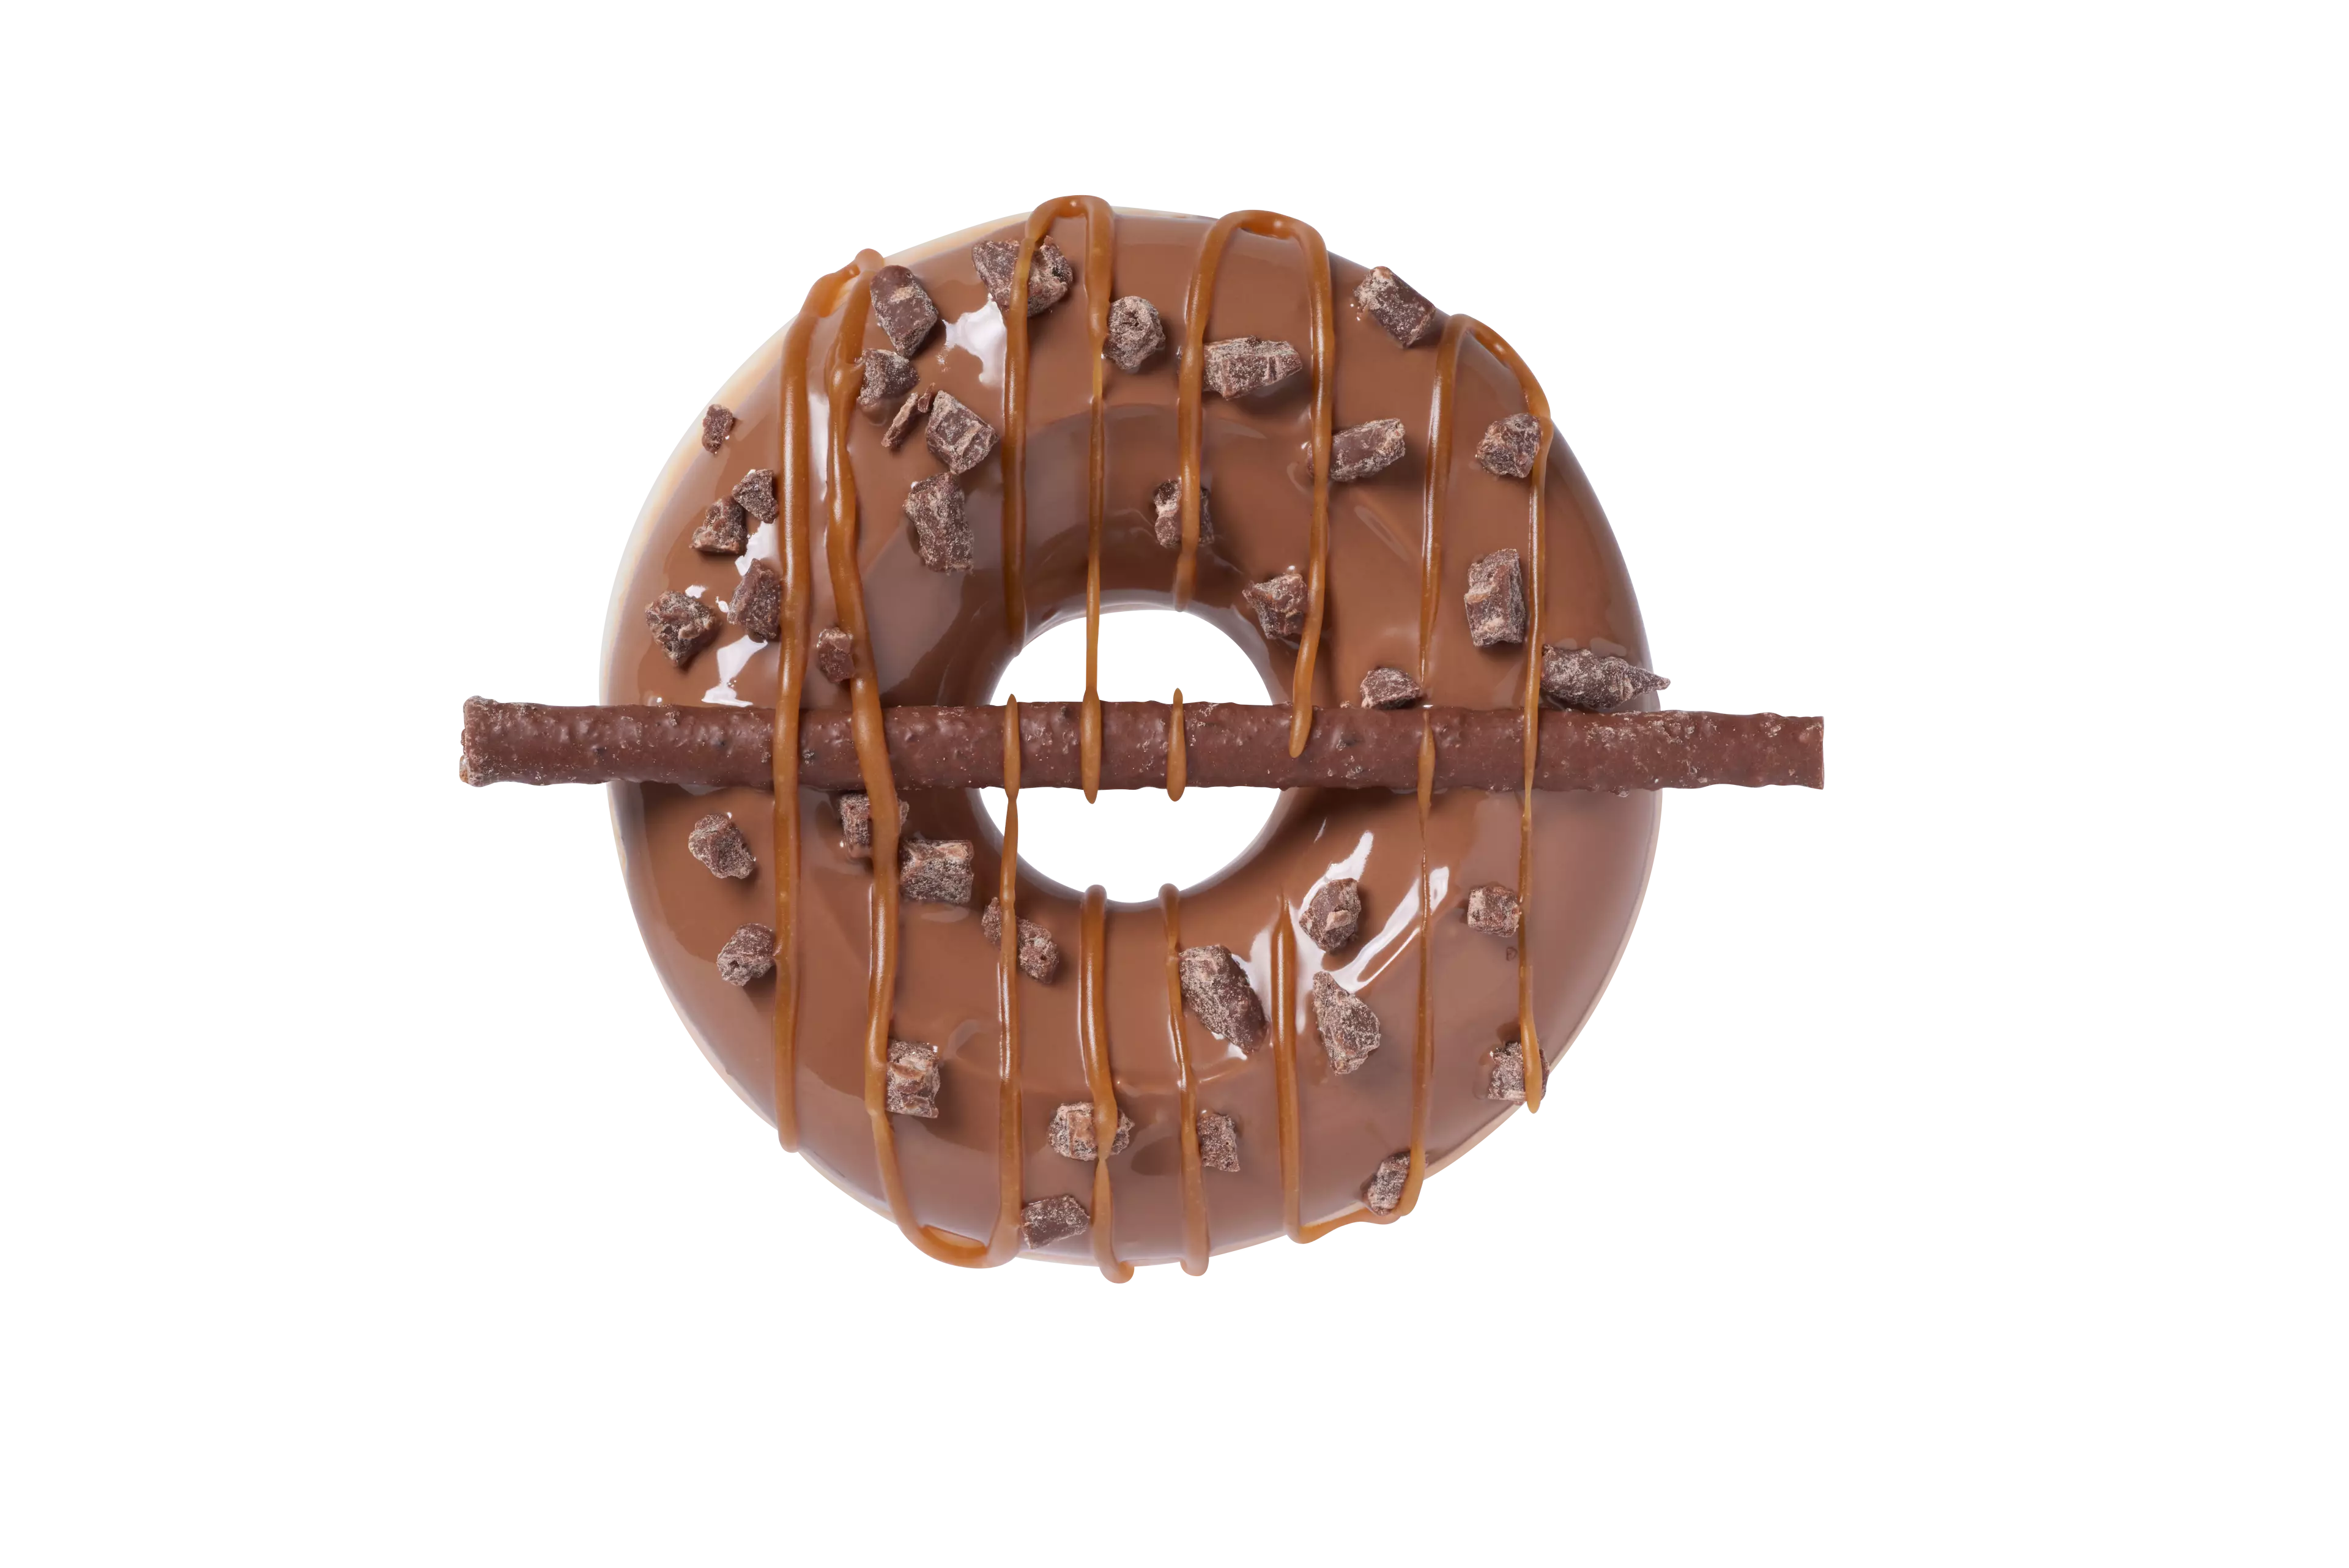 Krispy Kreme have introduced new doughnuts for November (